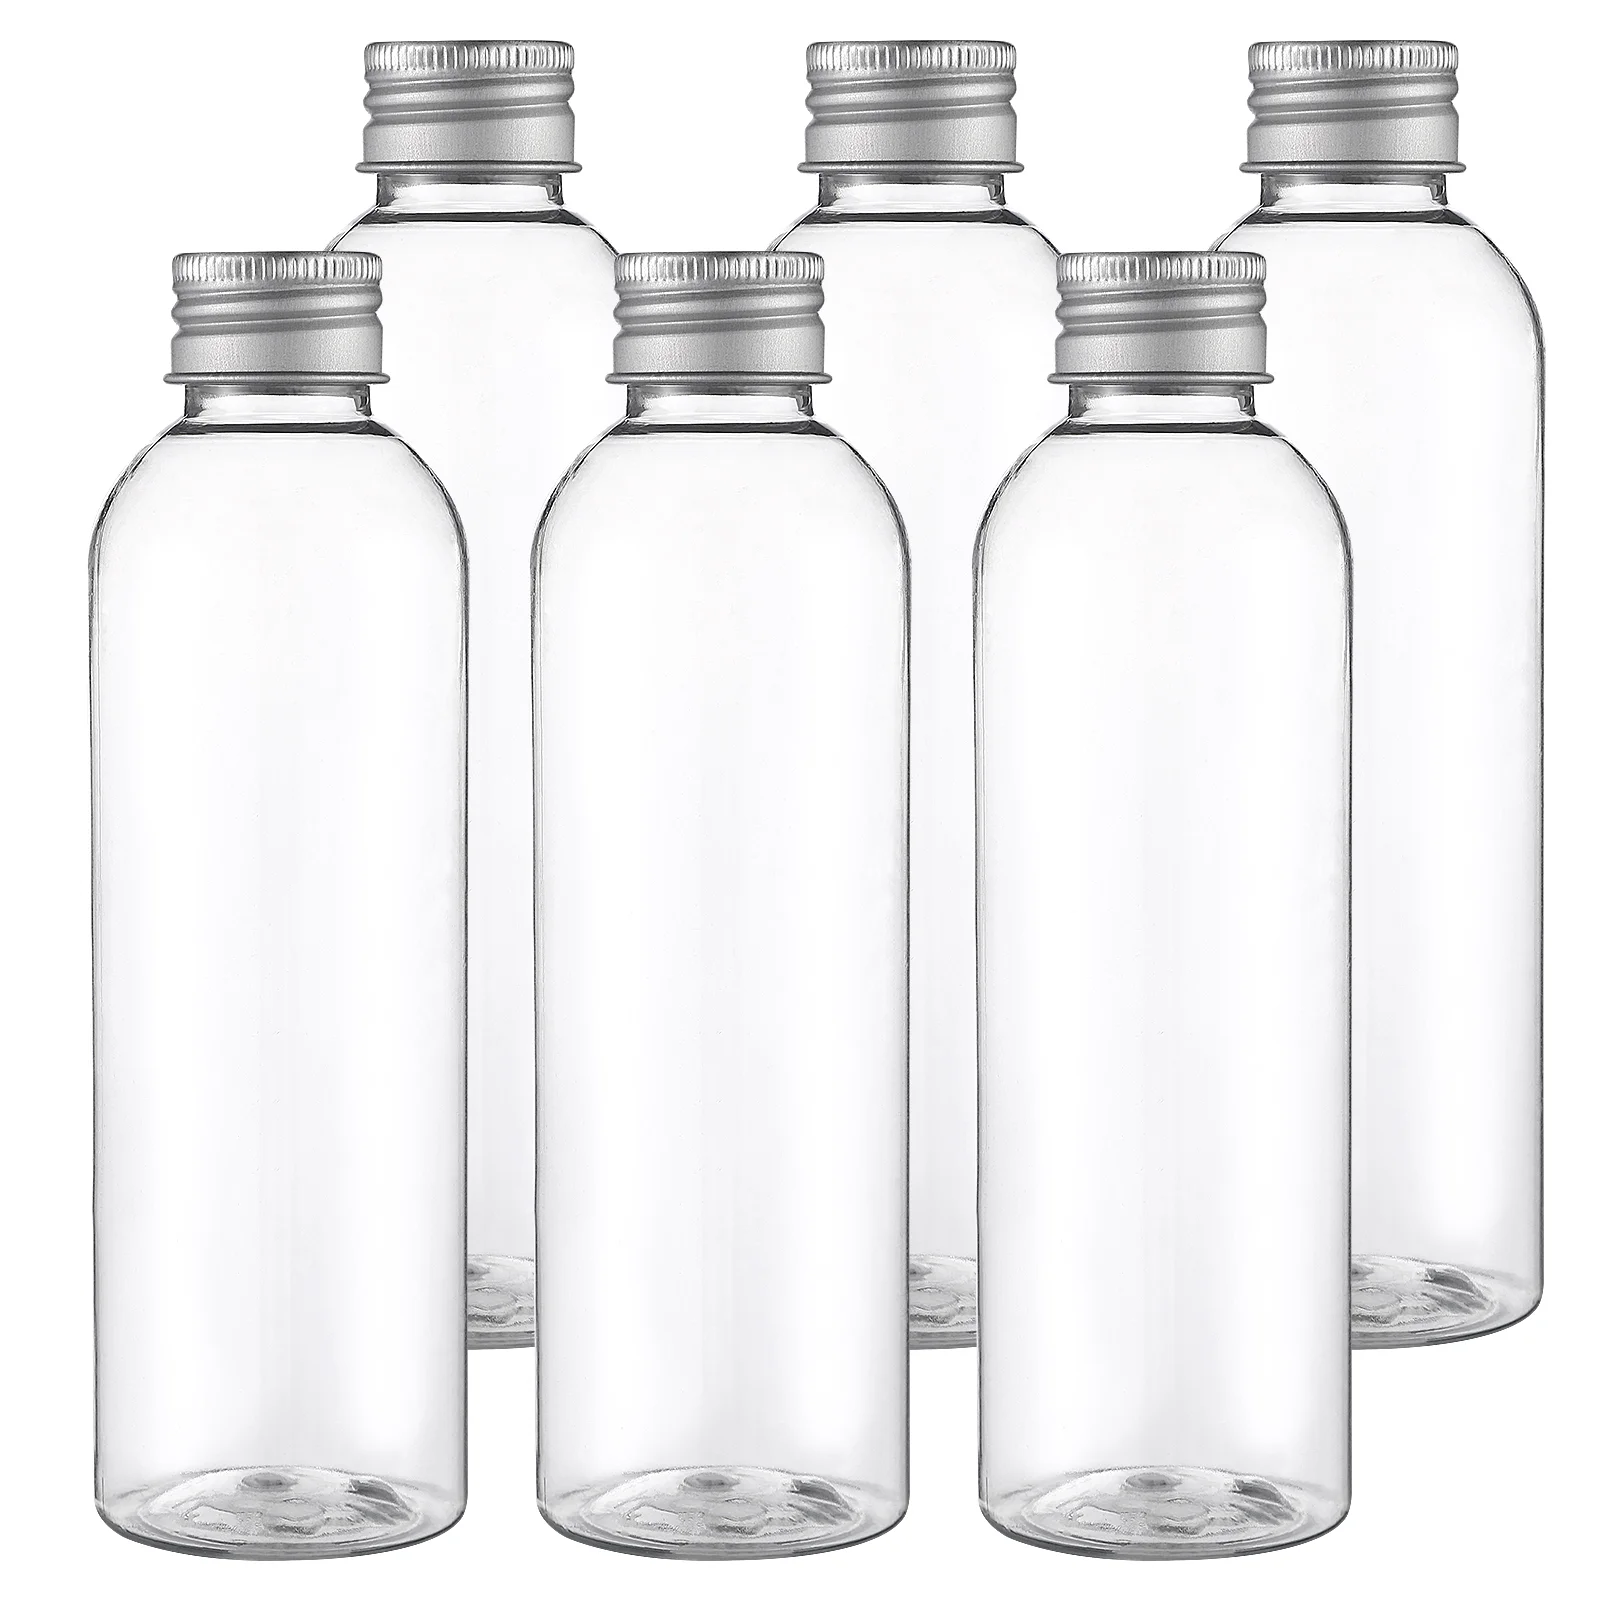 

6 Pcs Plastic Bottles Refillable Travel Toiletry Traveling Empty Juice Caps Screw Shampoo Lotion Squeeze